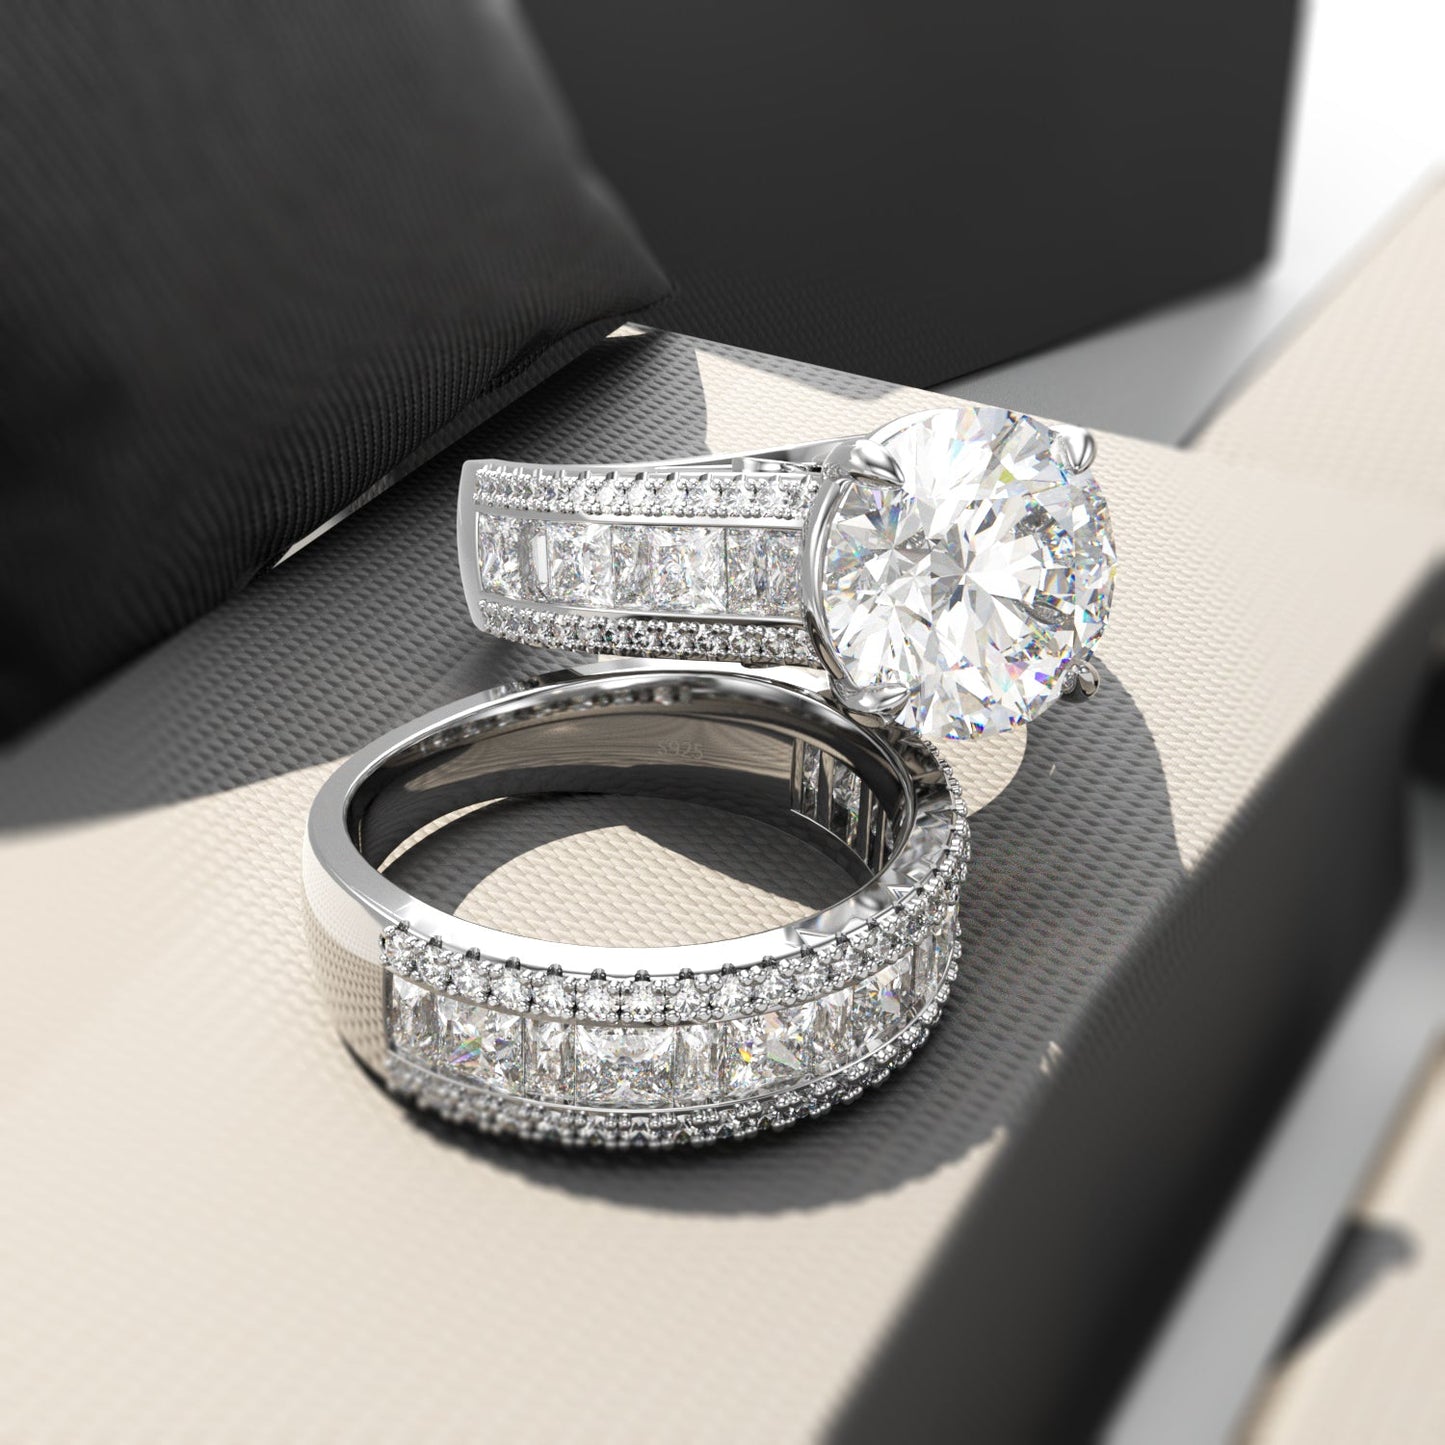 Jzora handmade round cut diamond sterling silver vintage bridal set